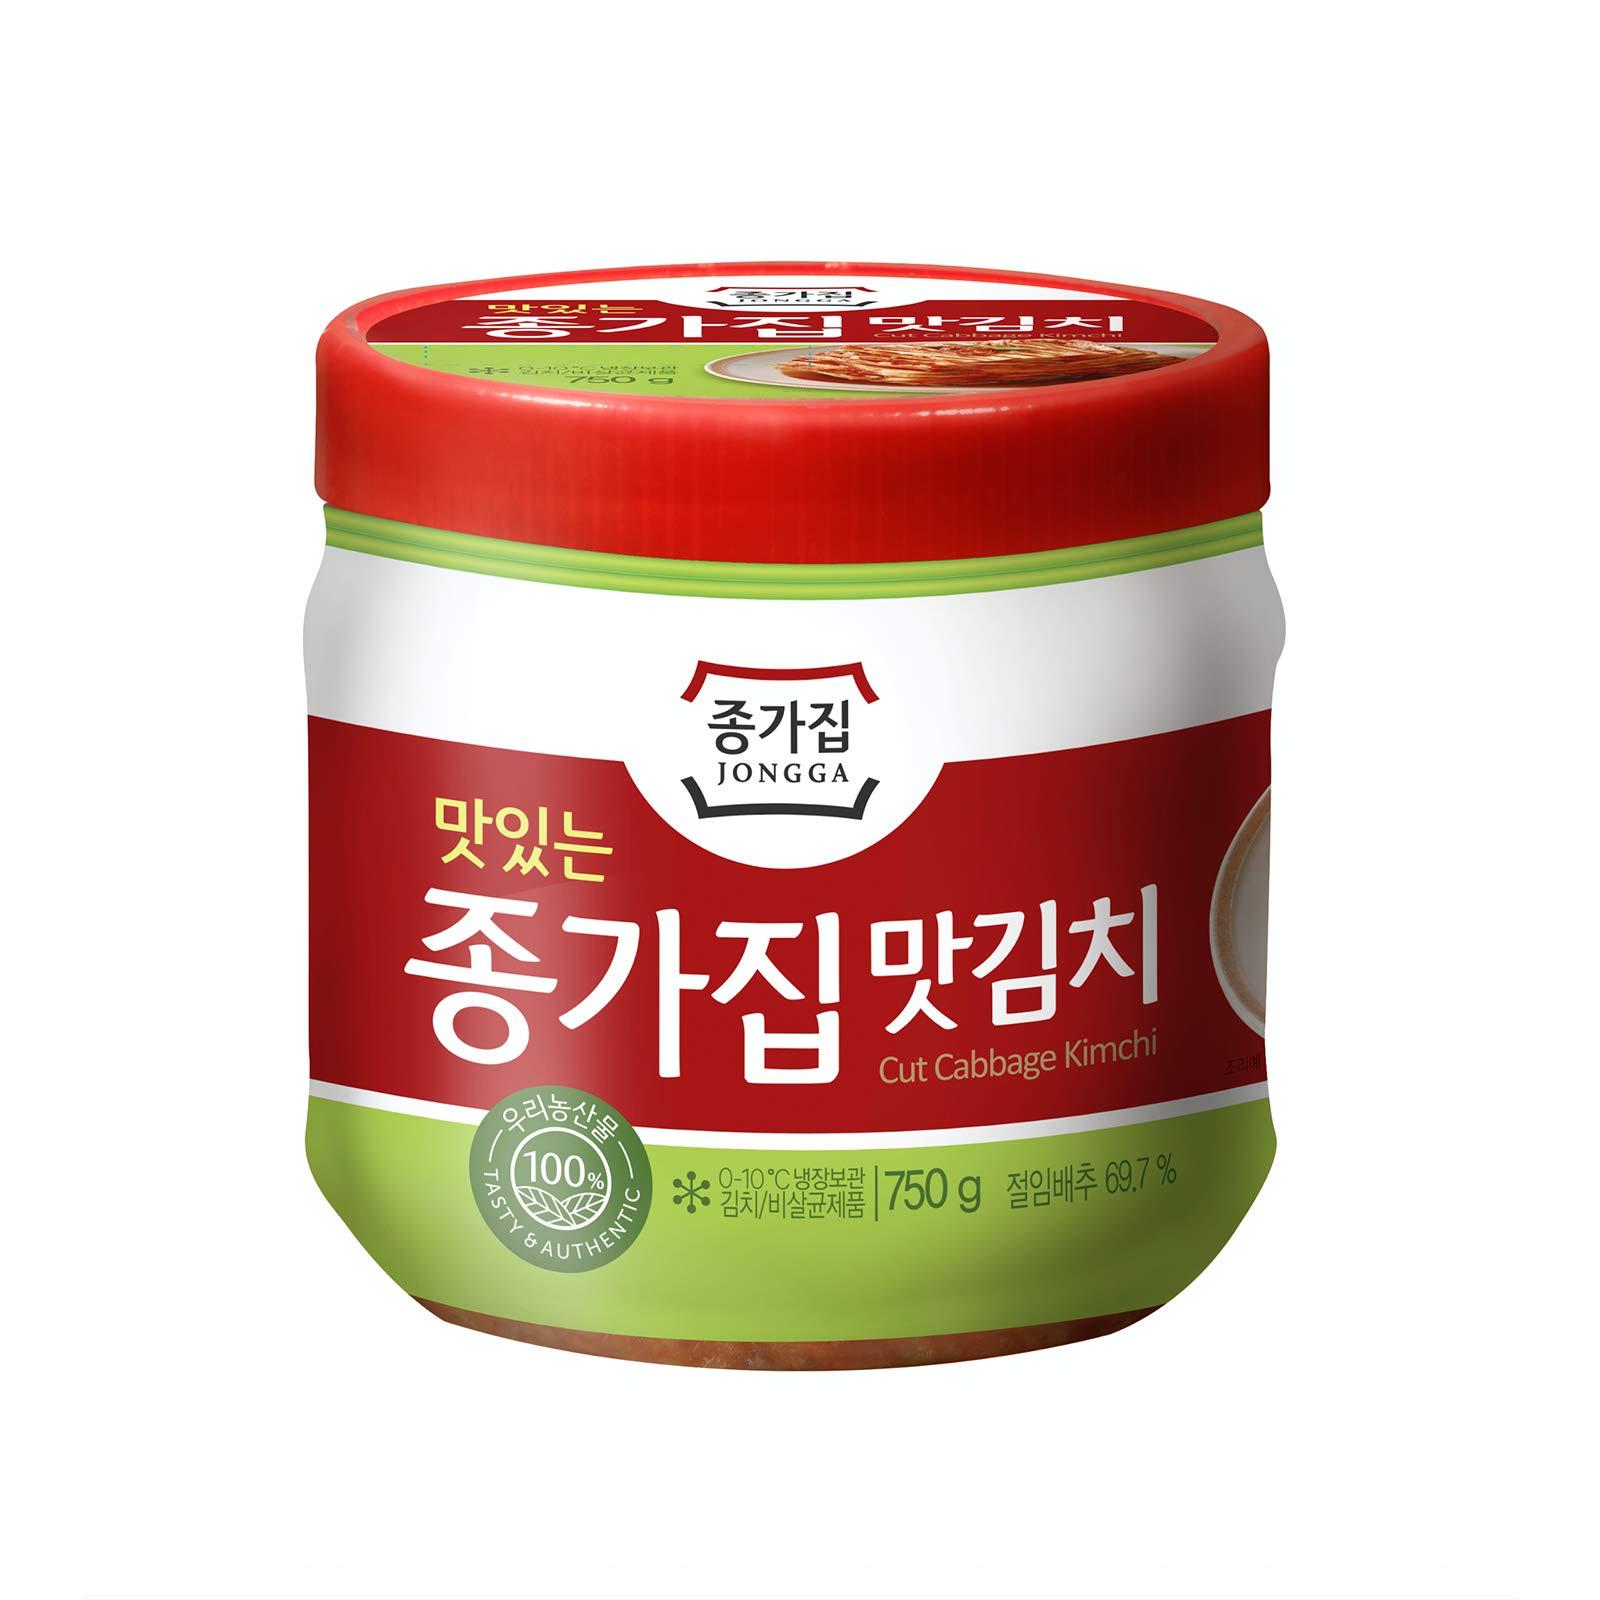 jongga-cabbage-kimchi